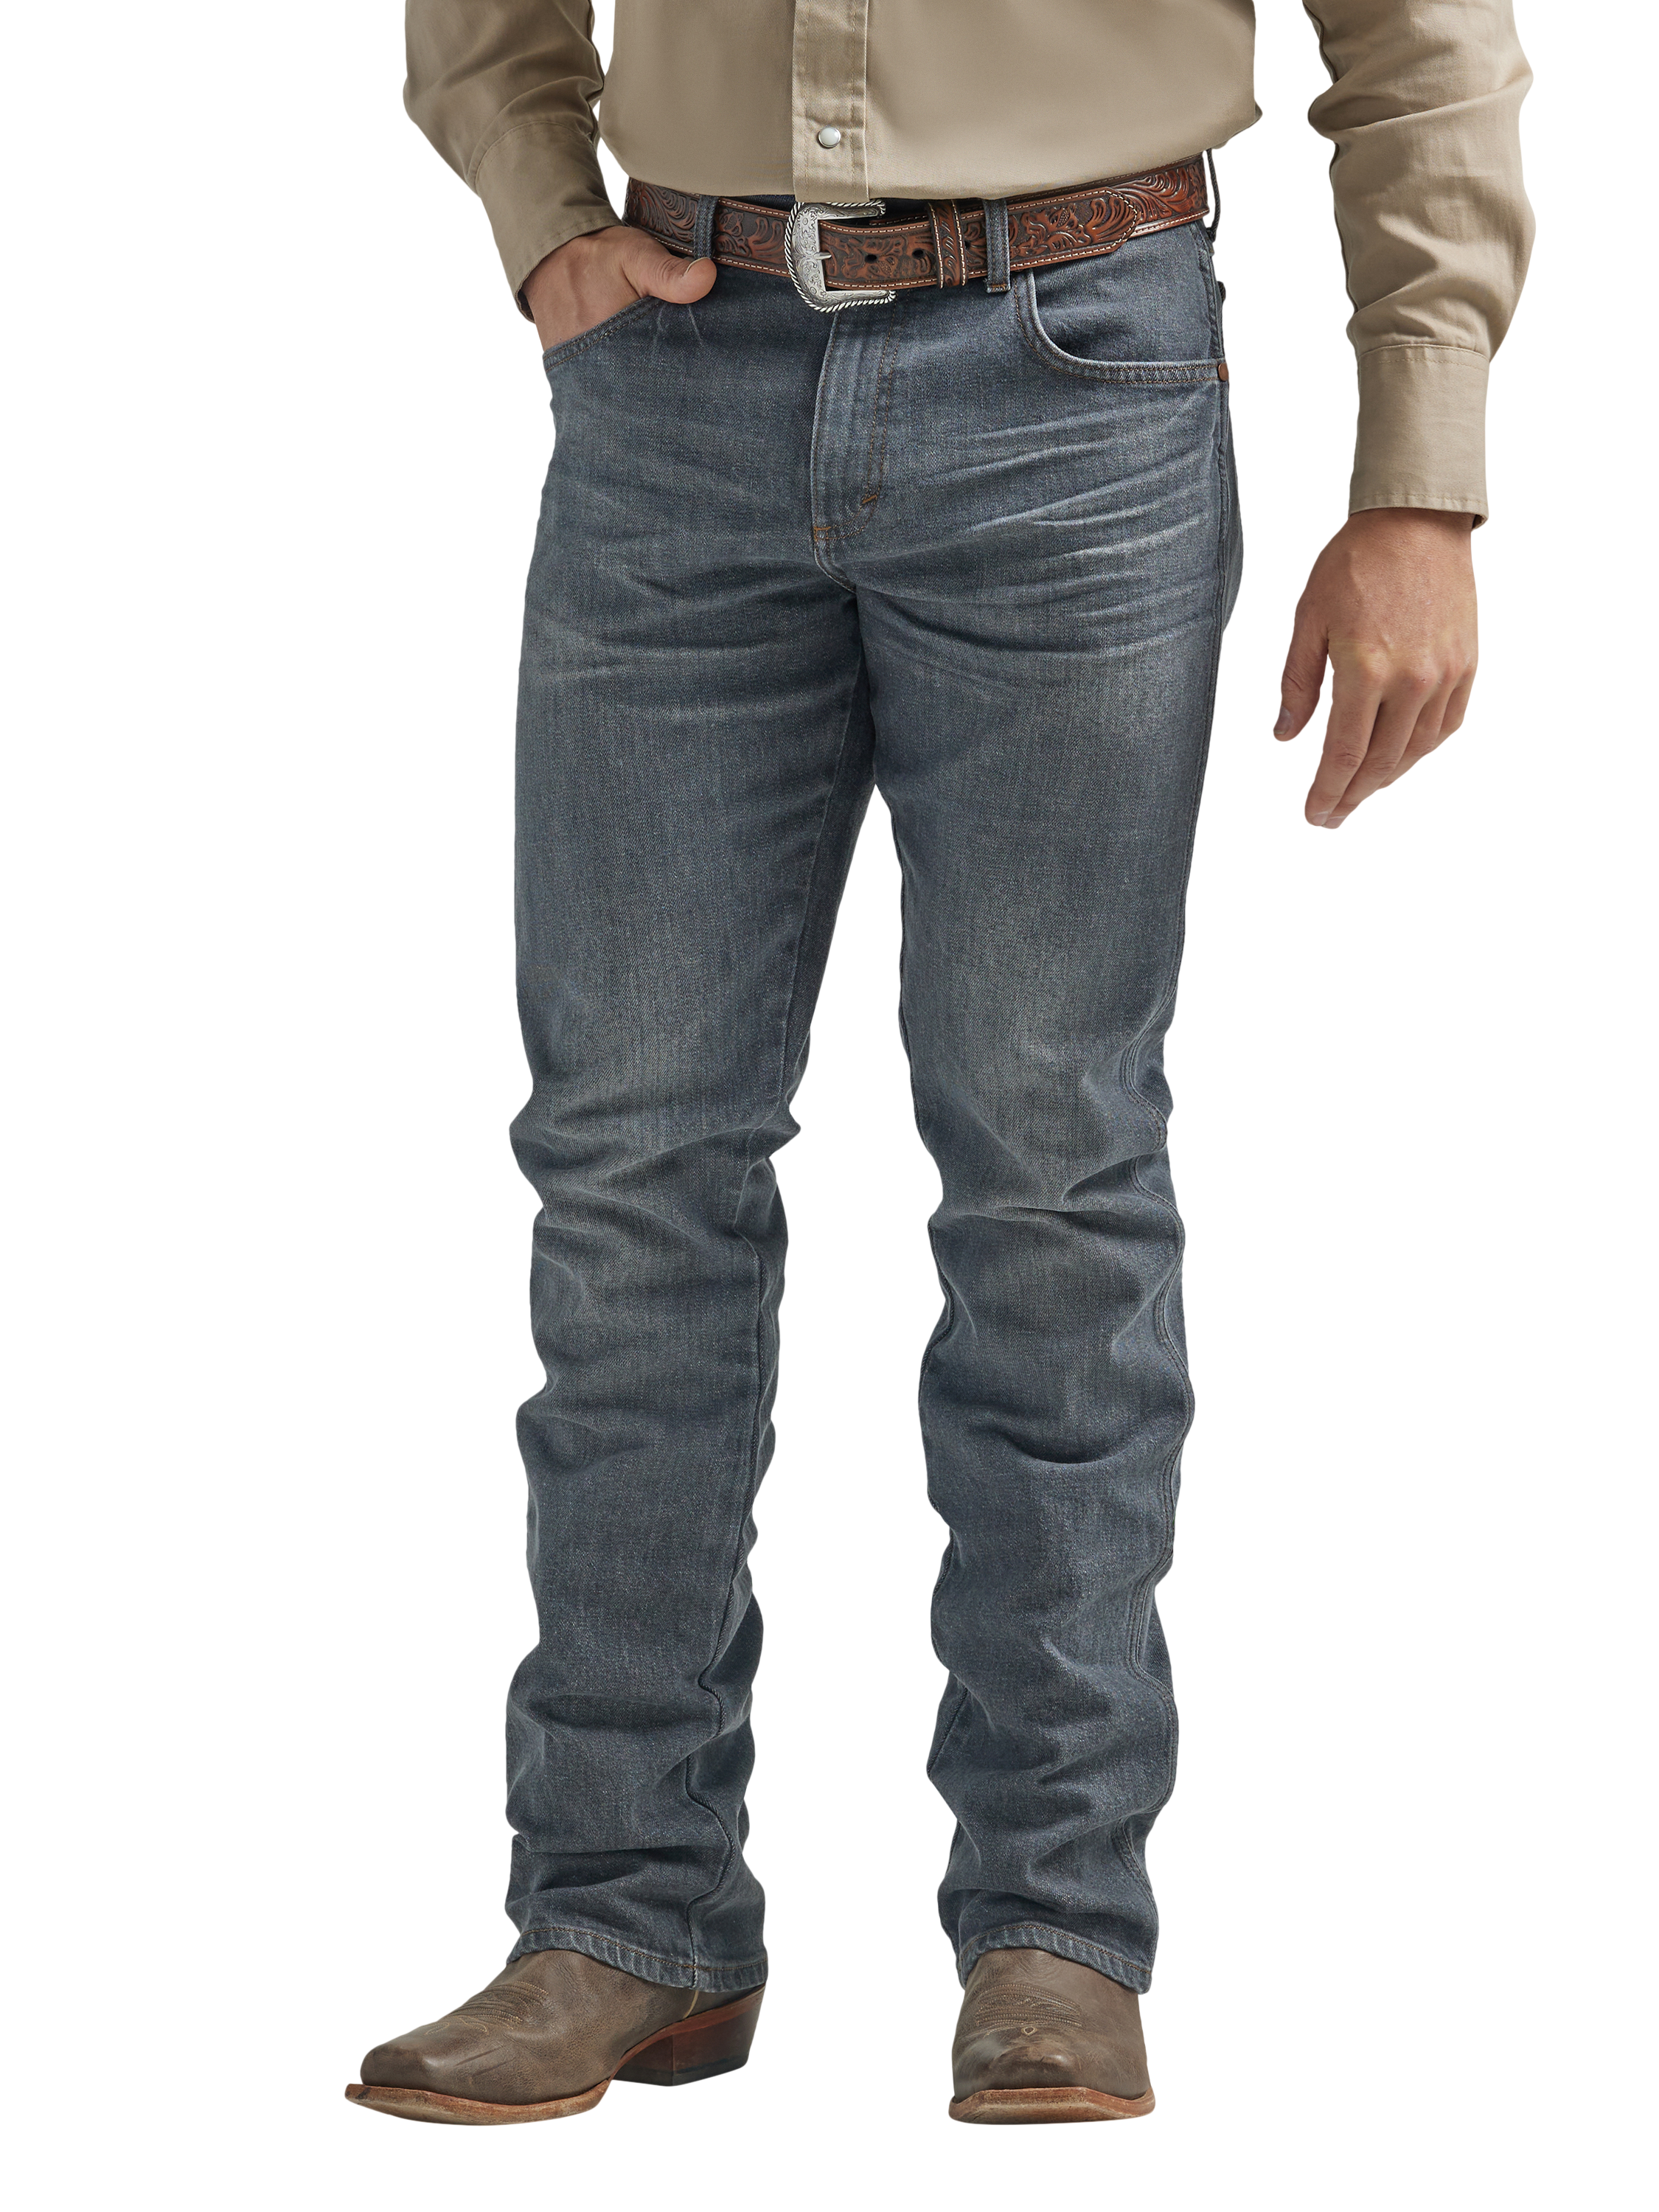 Wrangler Retro Slim-Fit Bootcut Jeans for Men | Bass Pro Shops